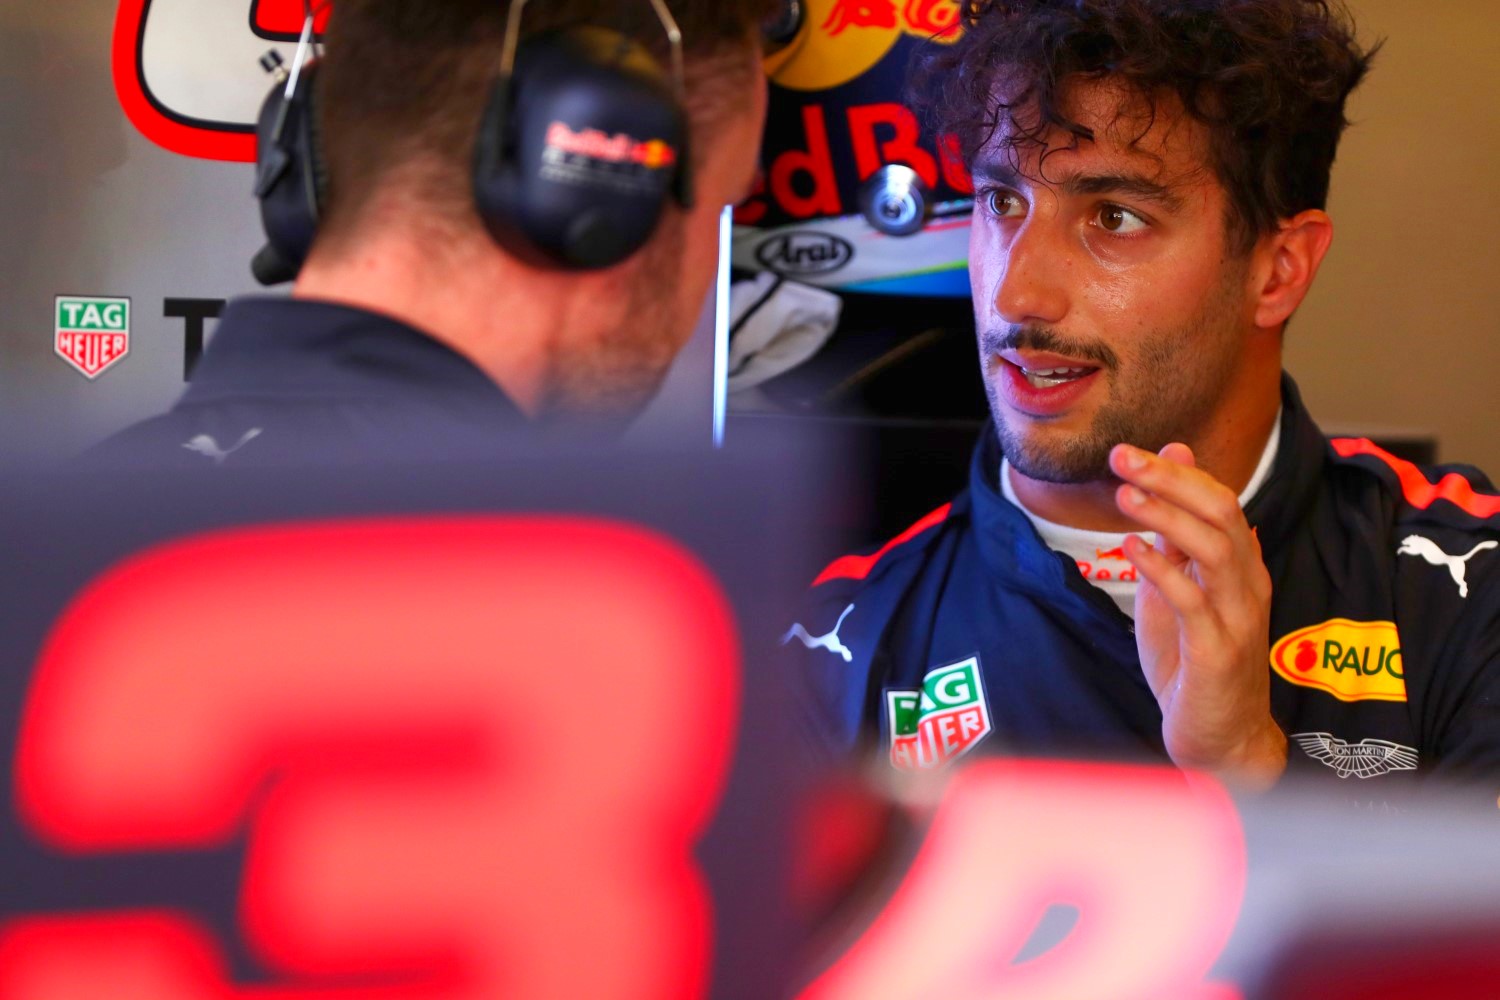 Daniel Ricciardo has no place to go until 2019 when the 2nd Ferrari seat might open up